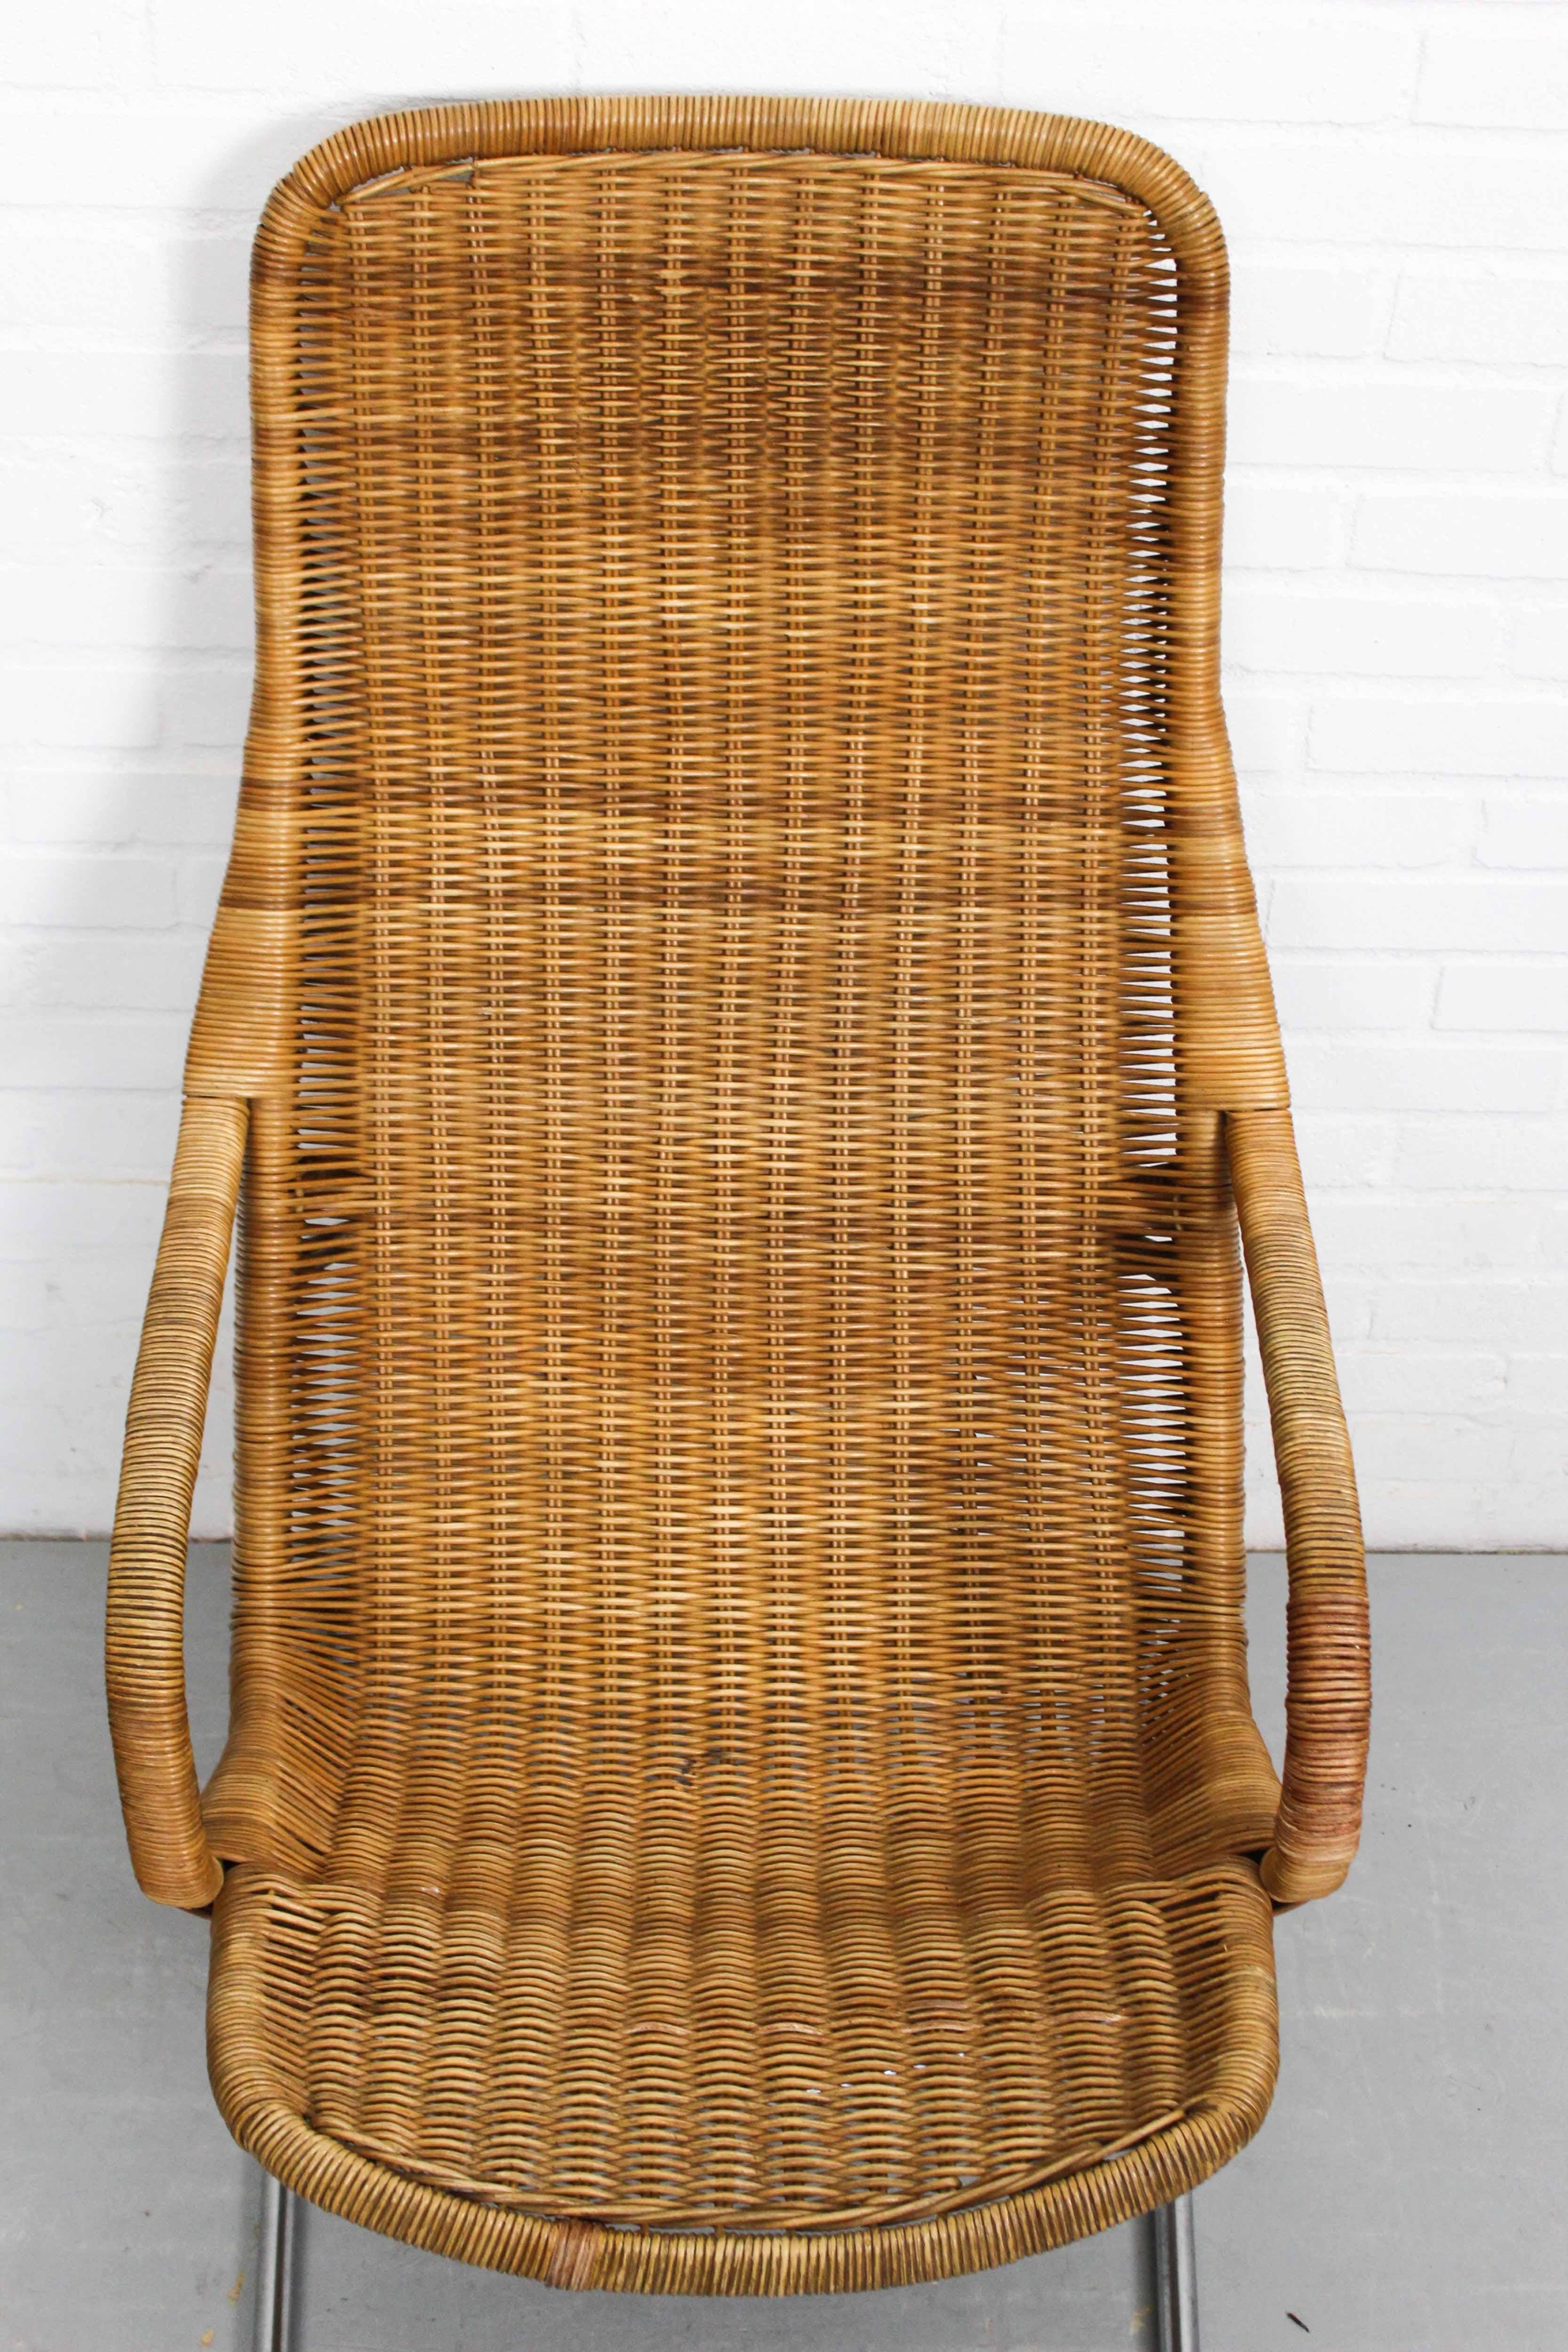 Rattan Mid Century Wicker Lounge Chair by Dirk van Sliedregt for Jonker Brothers, 1960s For Sale